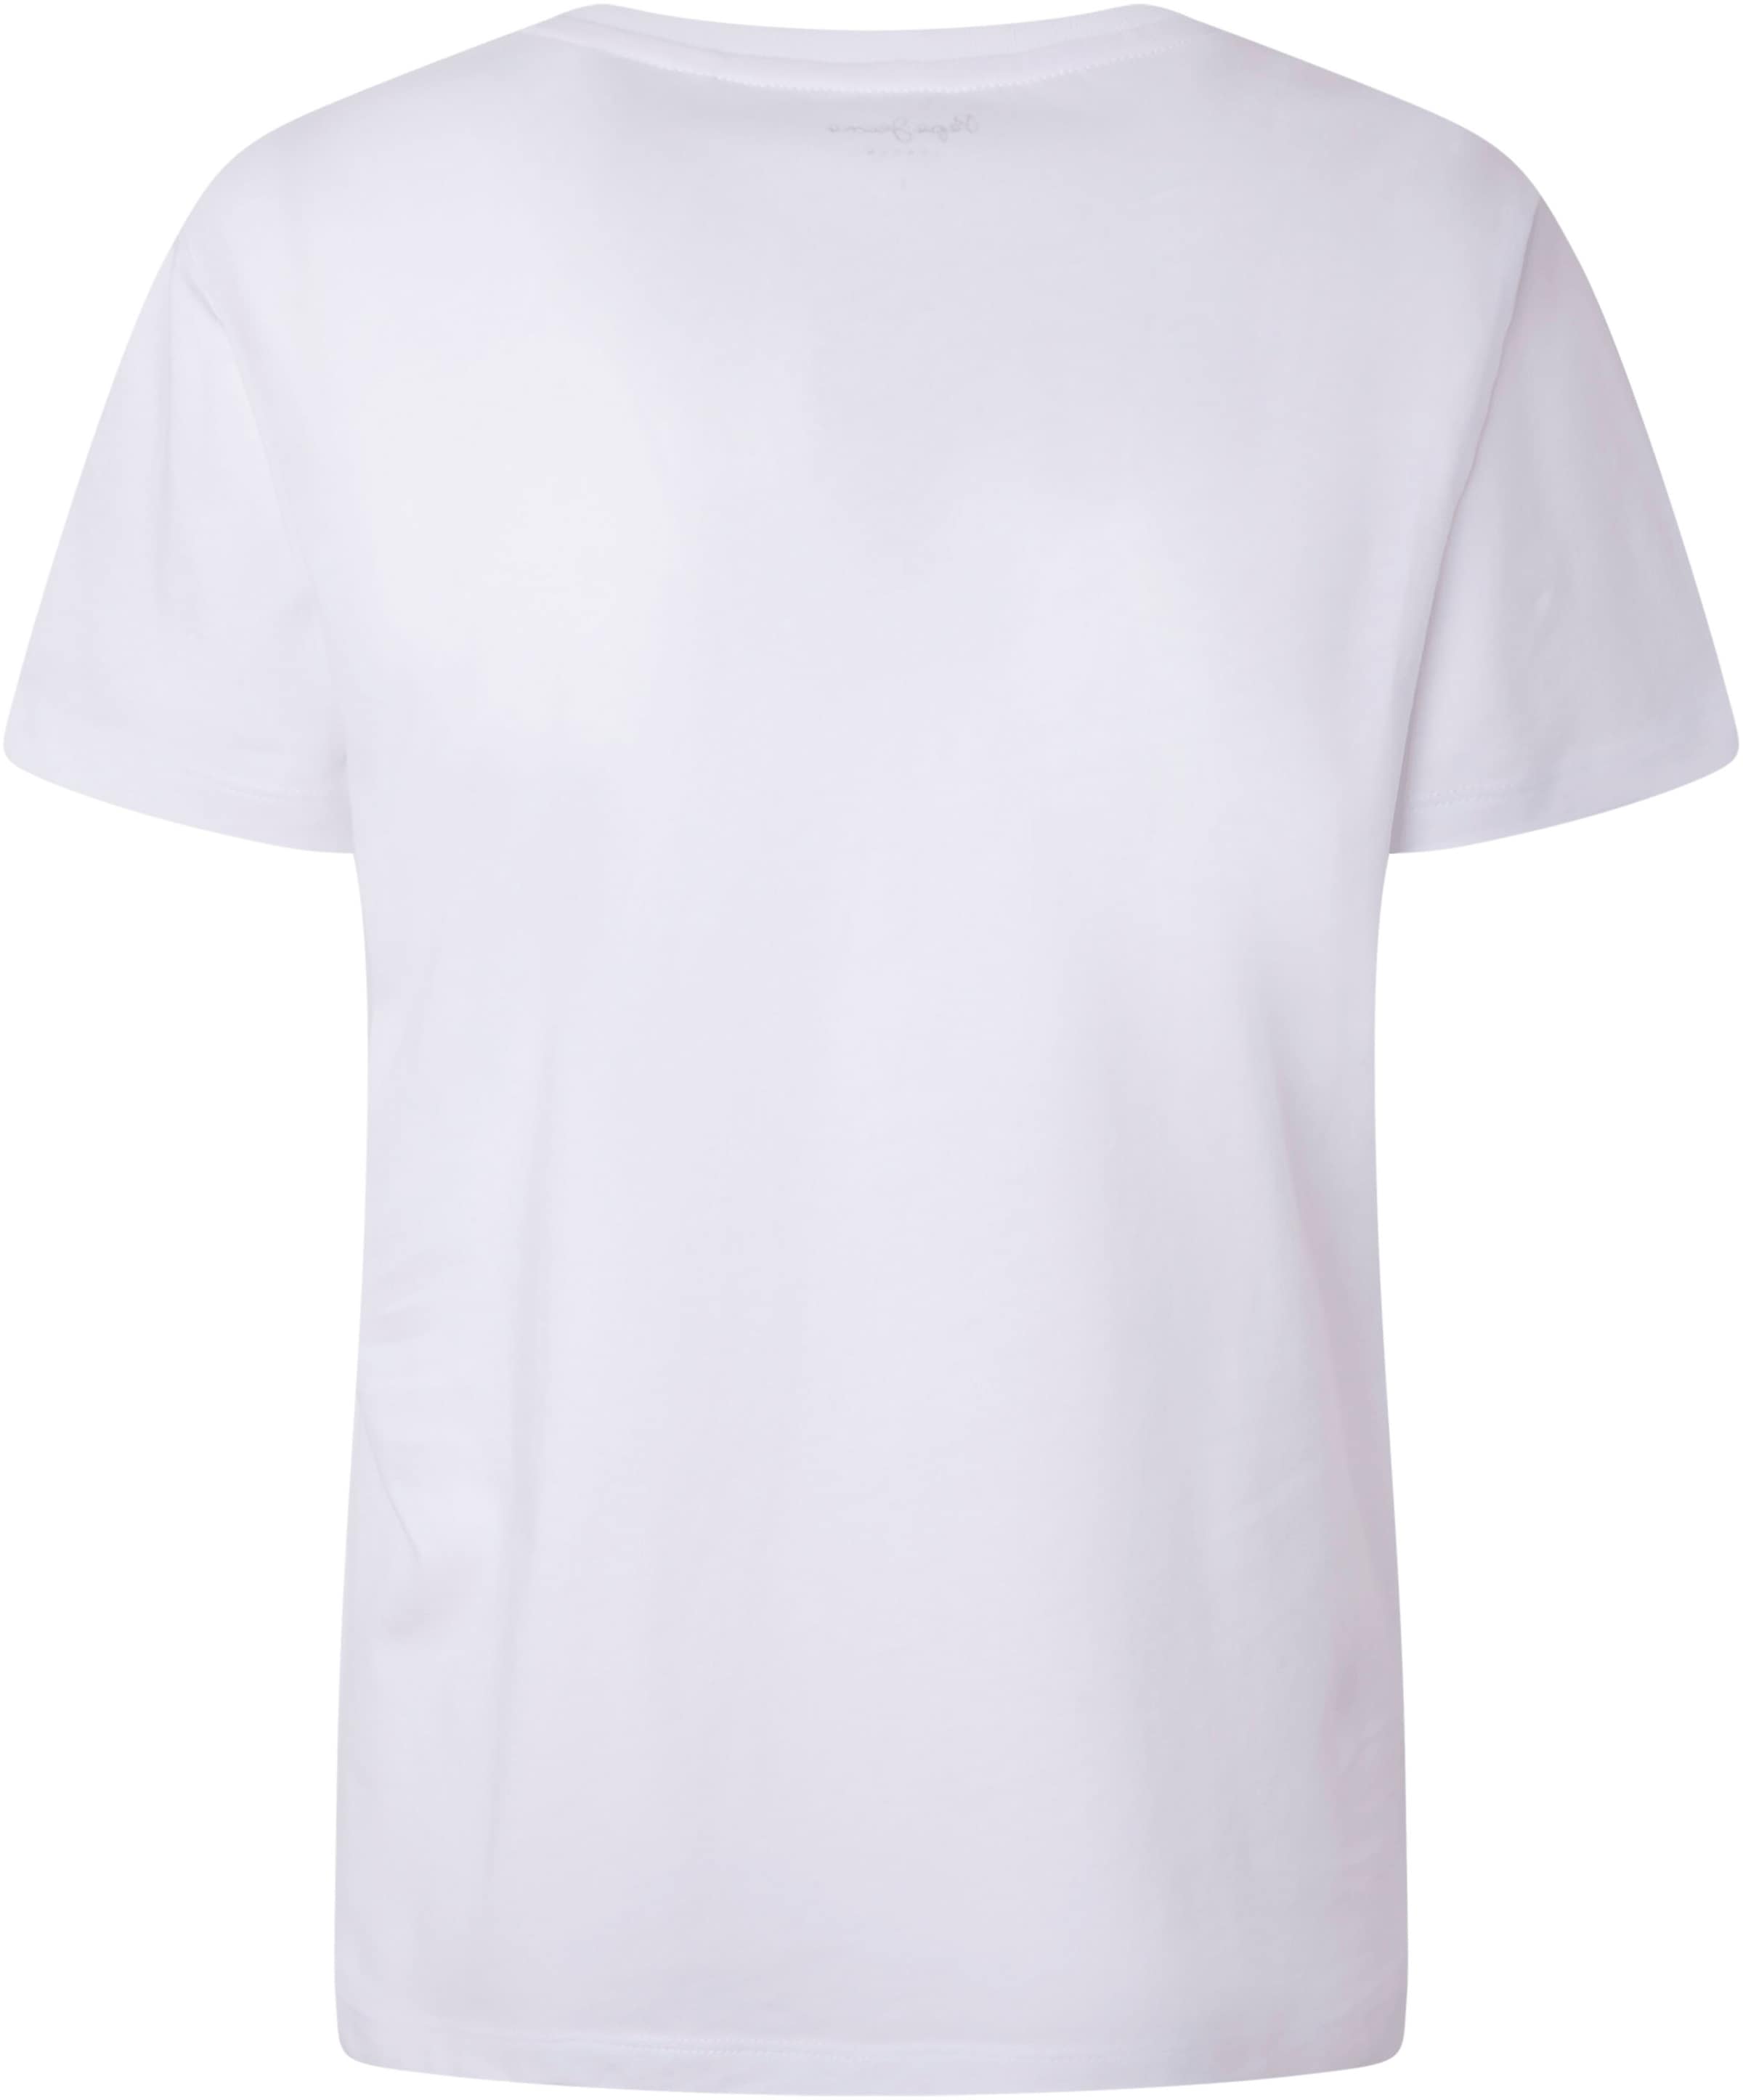 Pepe Jeans T-Shirt »Lali« kaufen